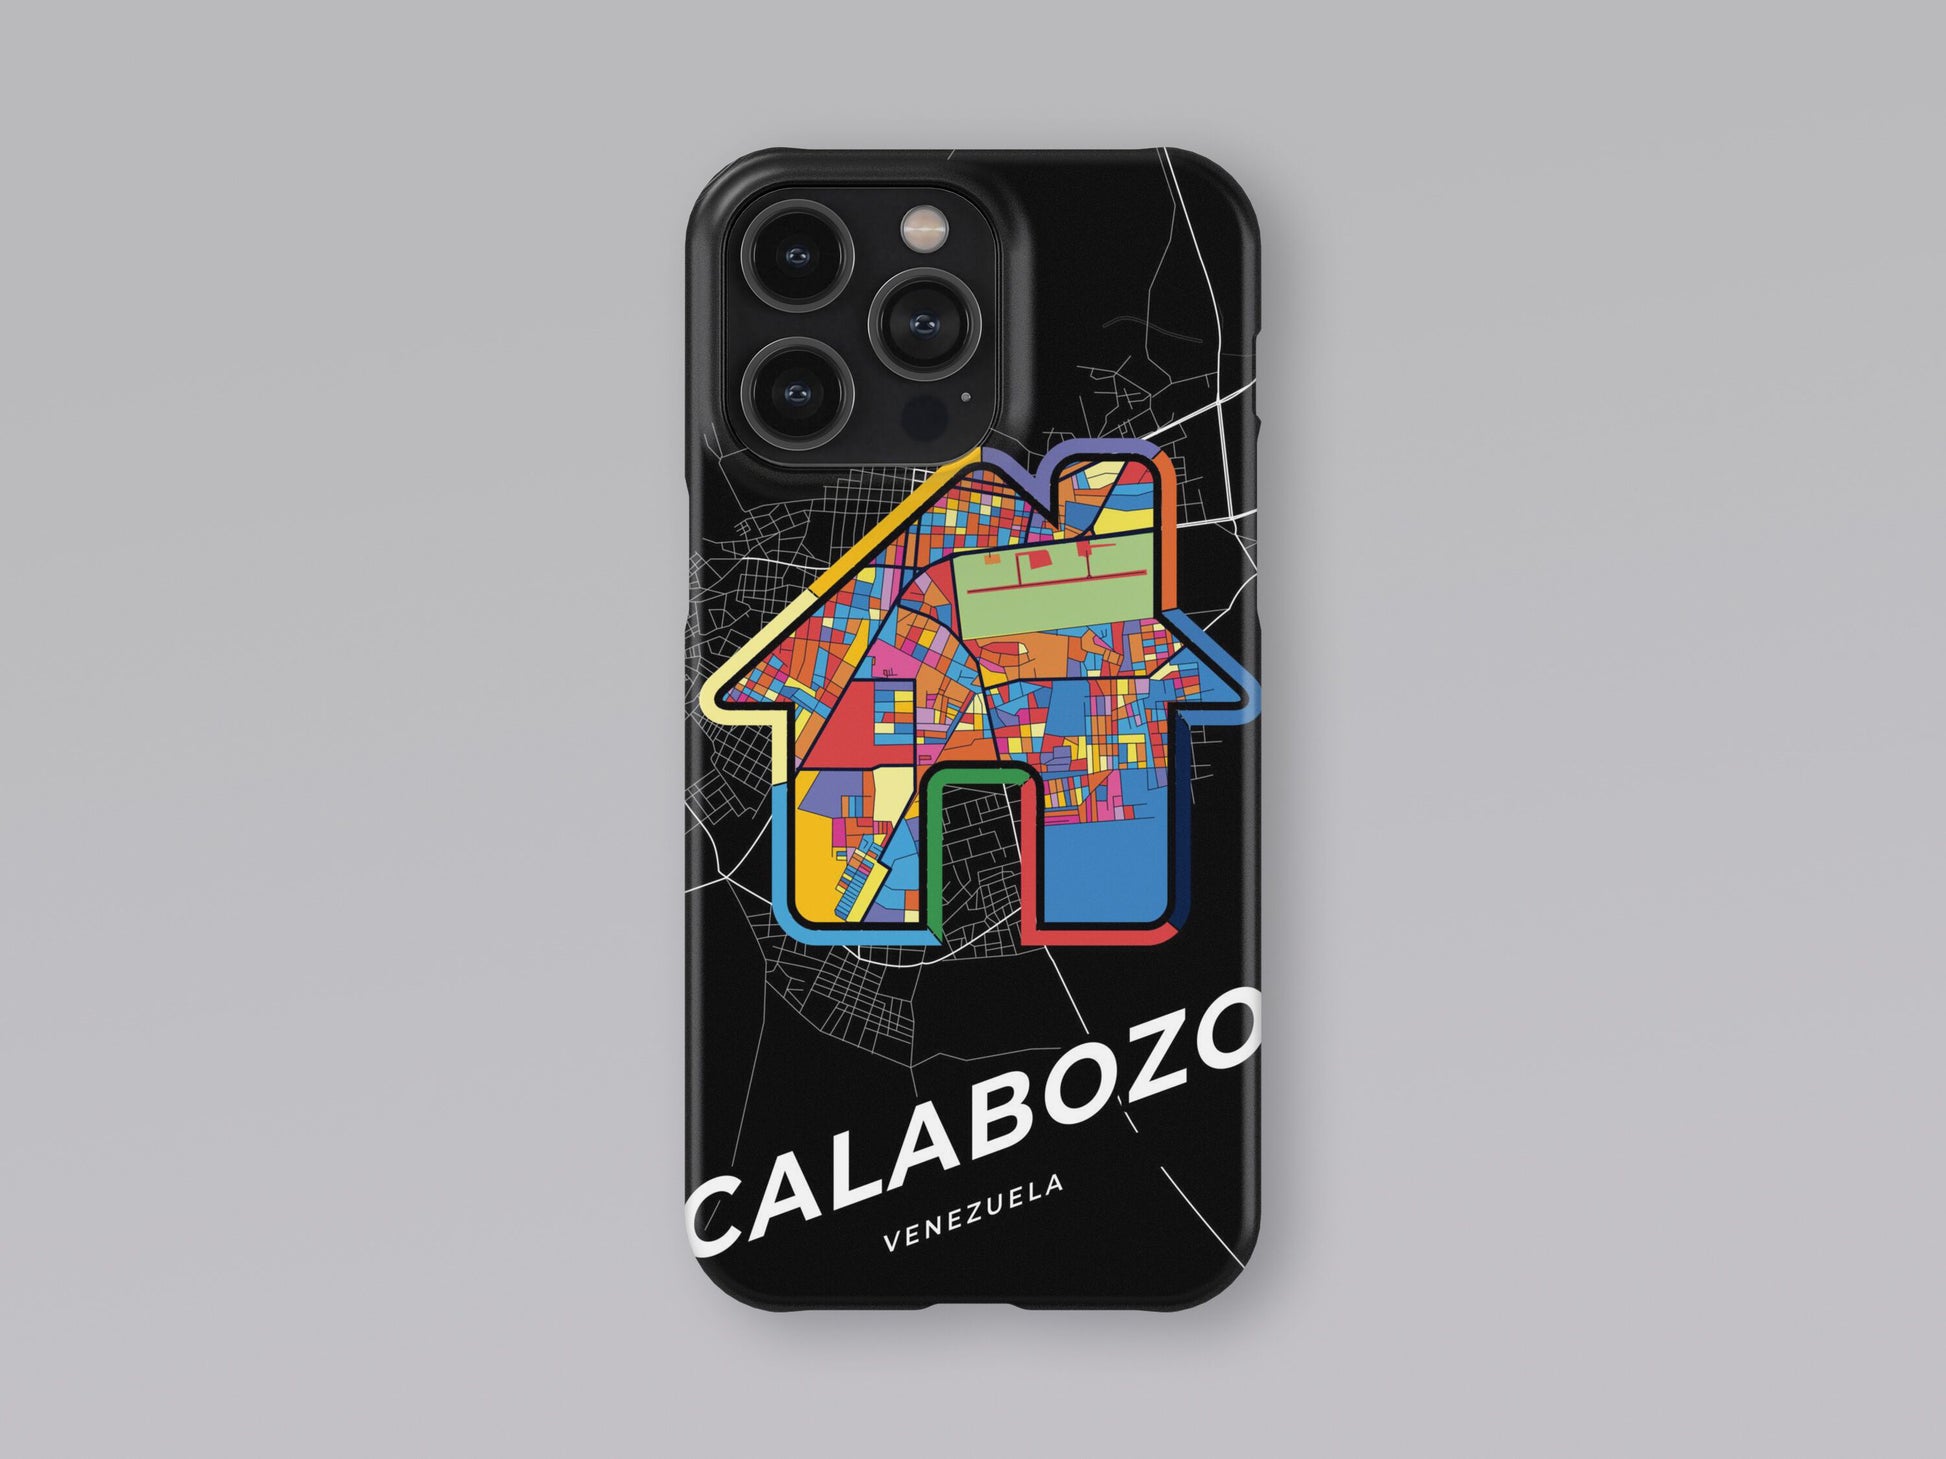 Calabozo Venezuela slim phone case with colorful icon. Birthday, wedding or housewarming gift. Couple match cases. 3